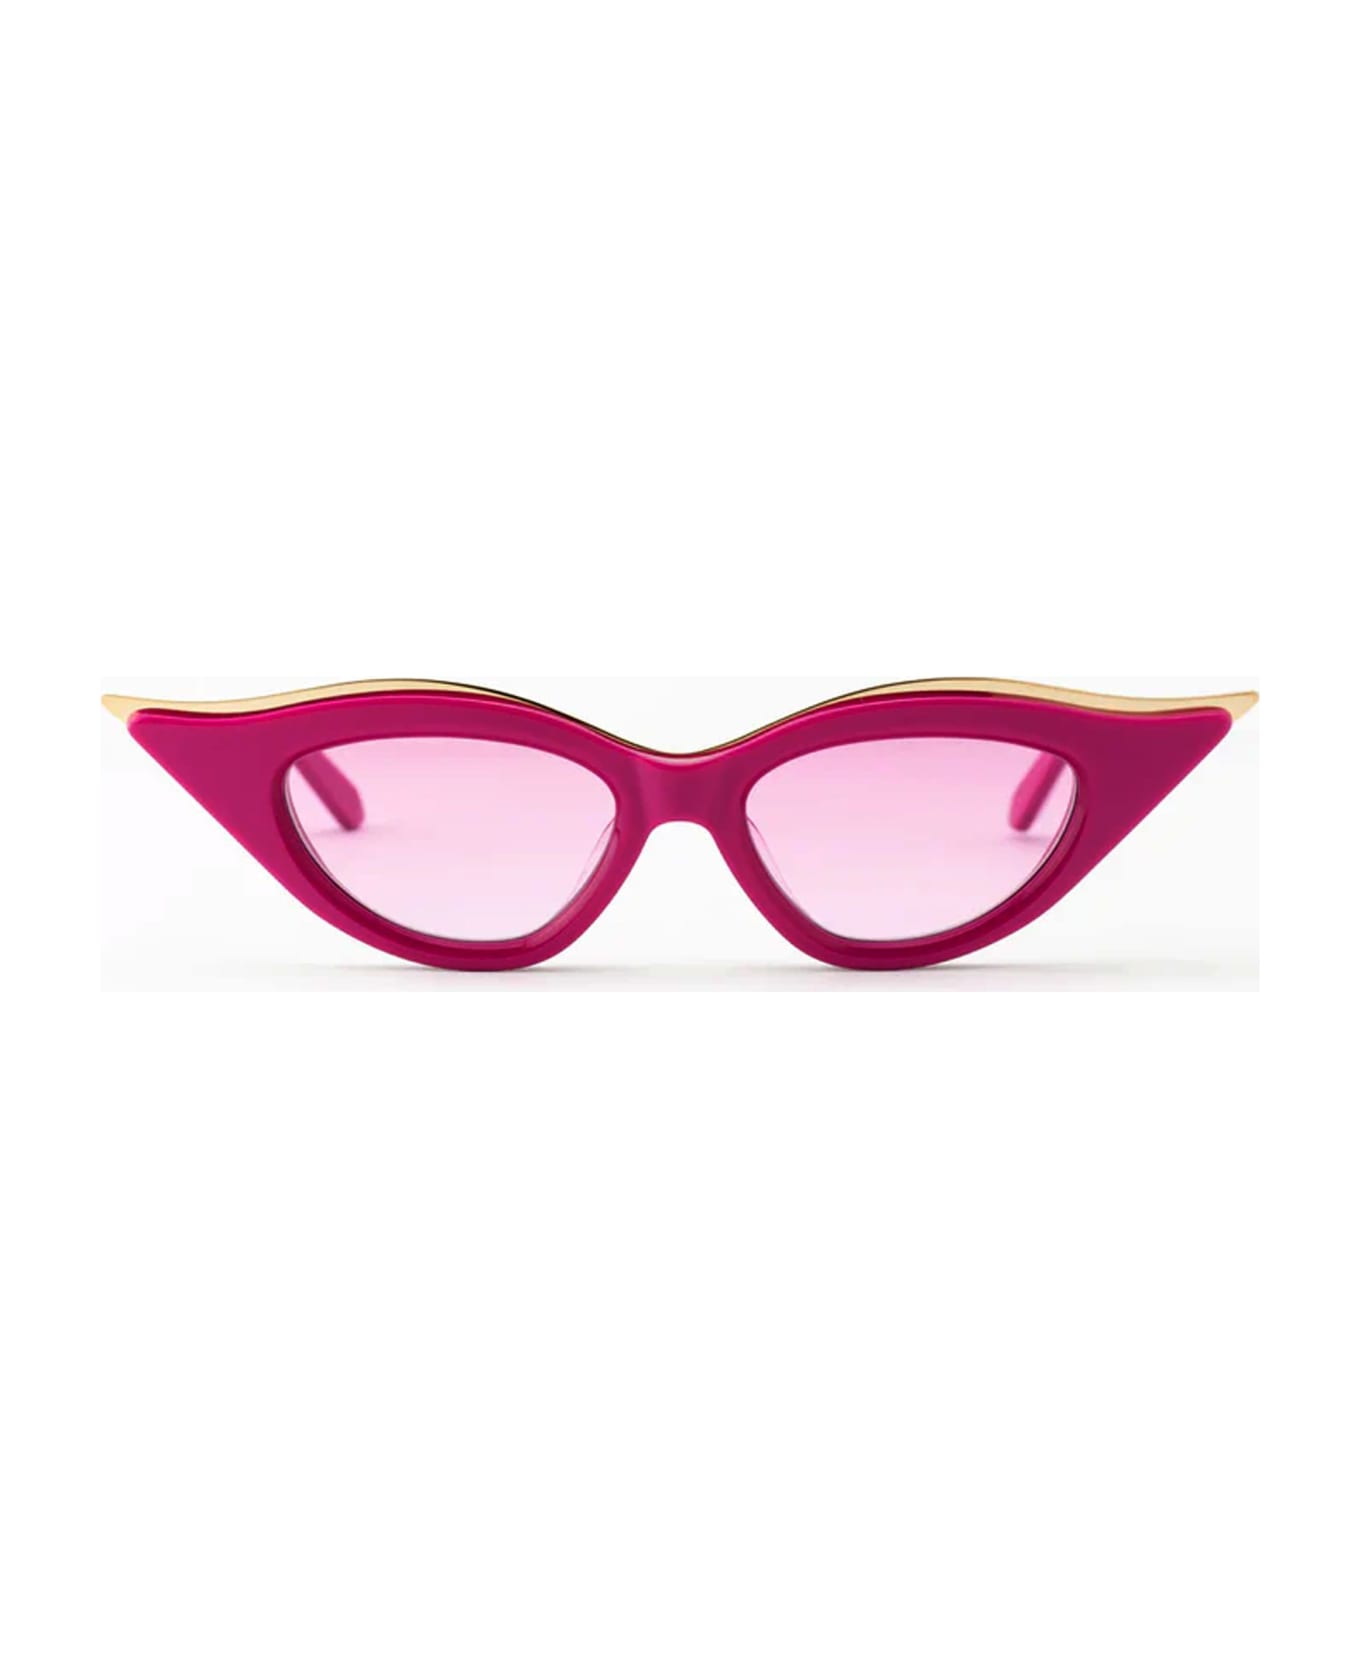 Valentino Eyewear V-goldcut Ii - Pink / White Gold Sunglasses - pink/gold